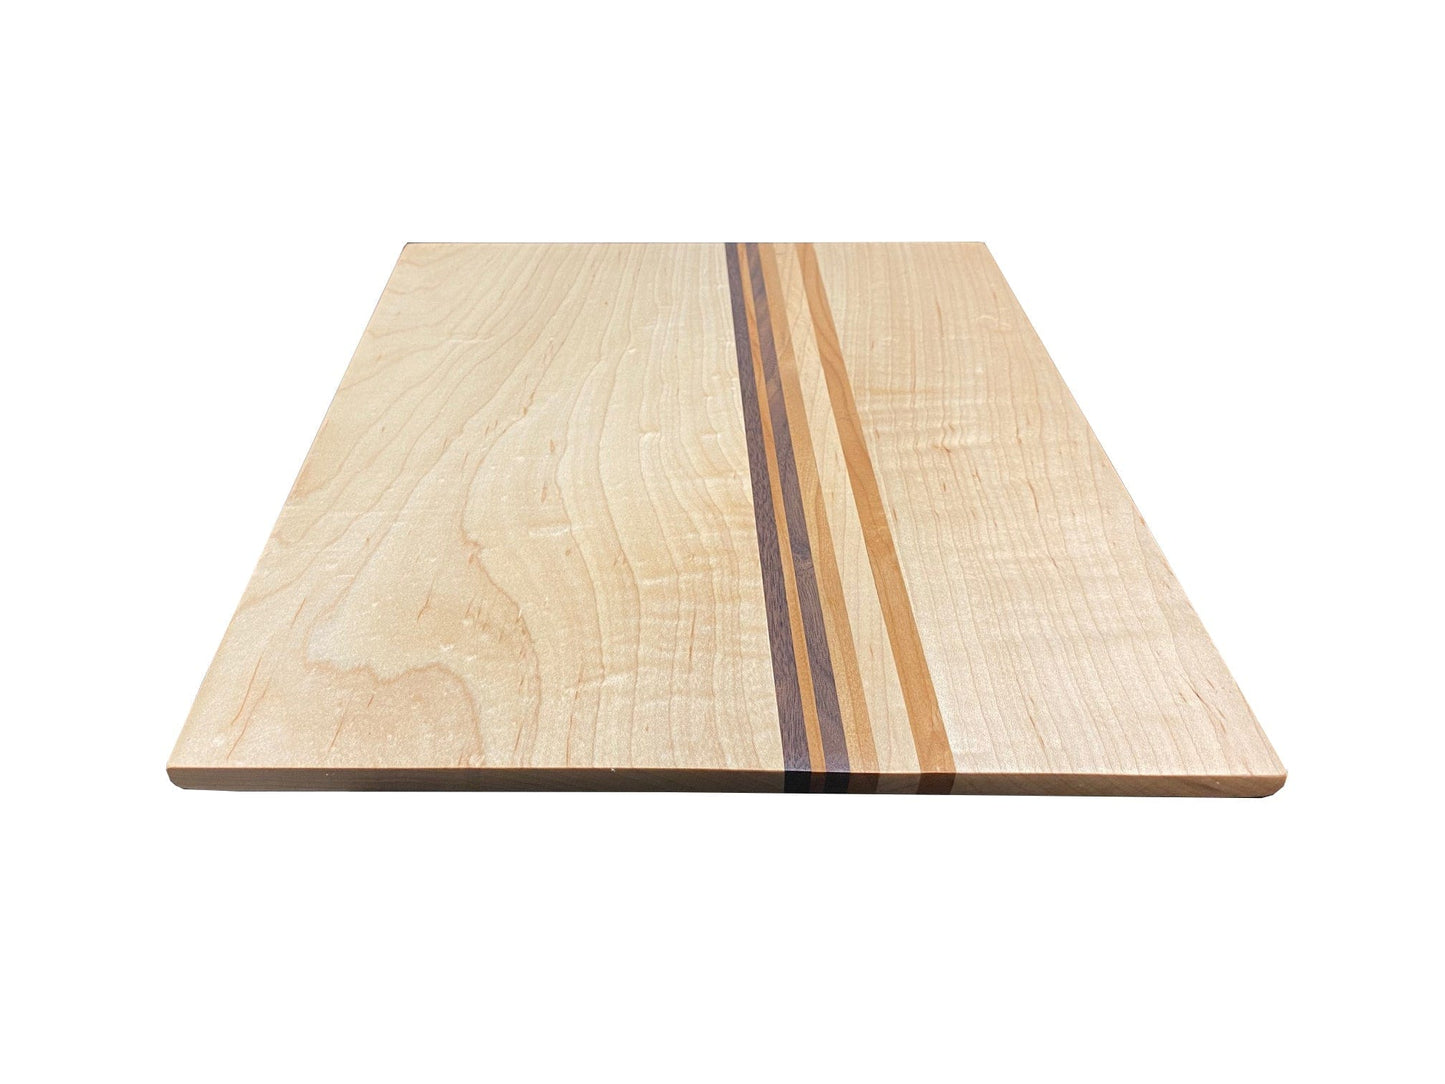 Best Redwood Cutting Boards Modern Maple Mixed with Walnut Side grain Cutting Board